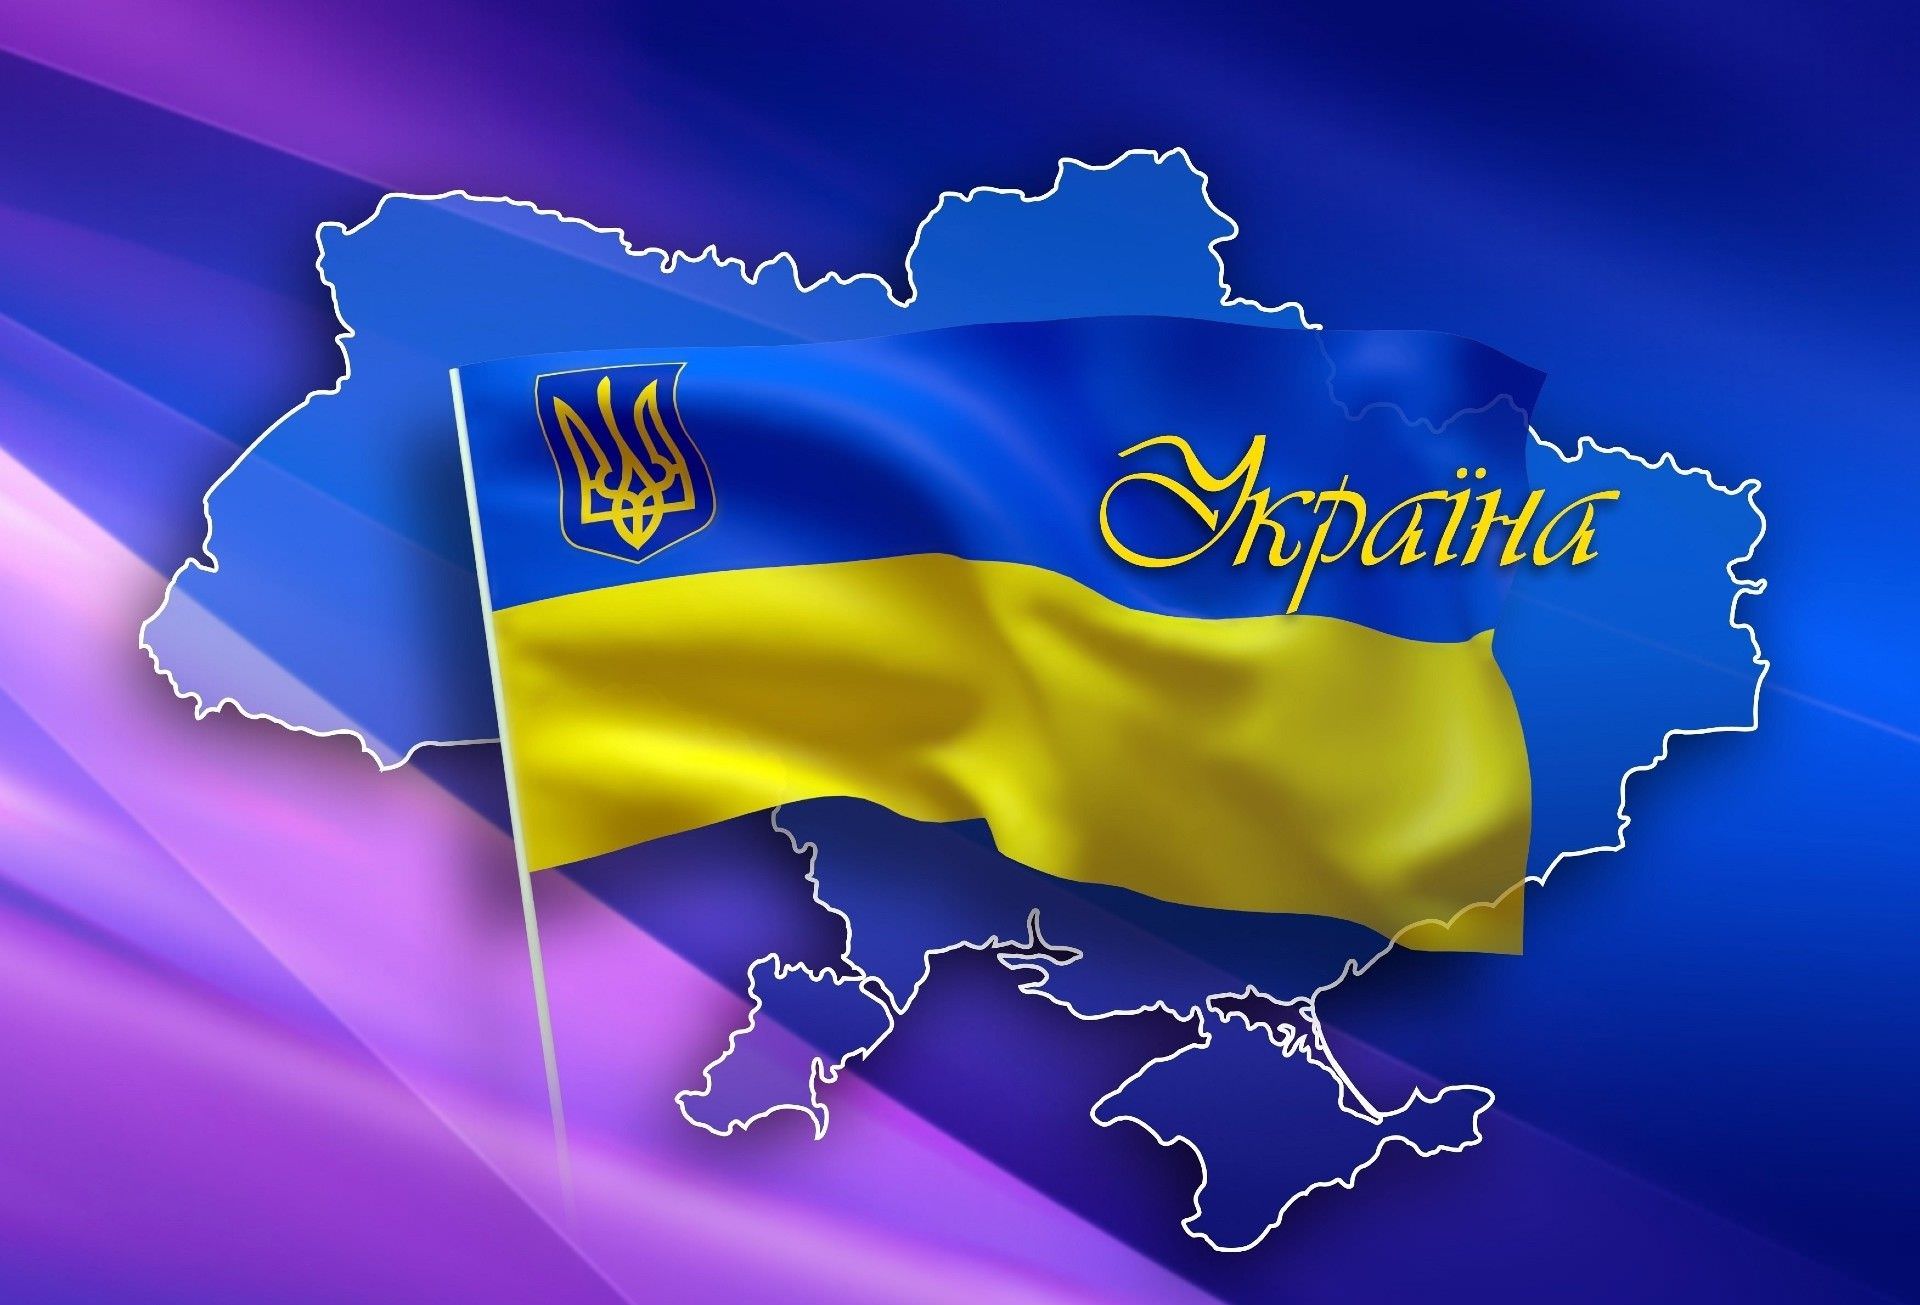 421 Ukraine Flag Wallpaper Stock Video Footage  4K and HD Video Clips   Shutterstock